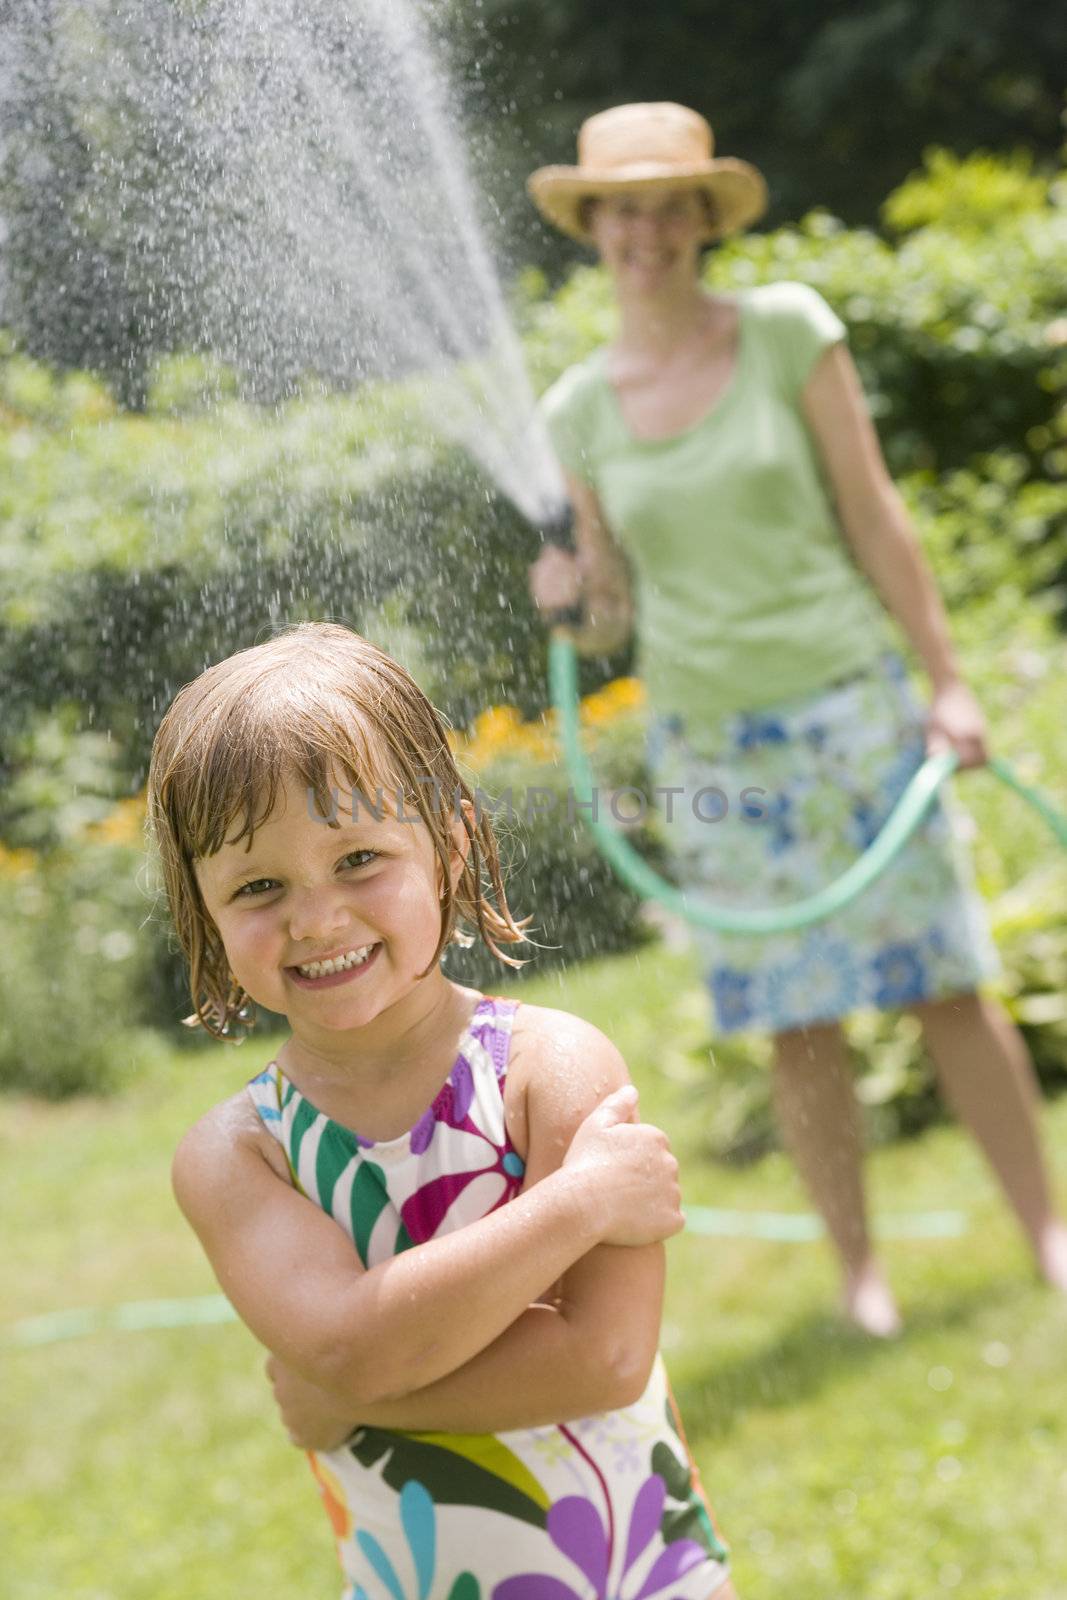 Summer water fun with garden hose rain by edbockstock